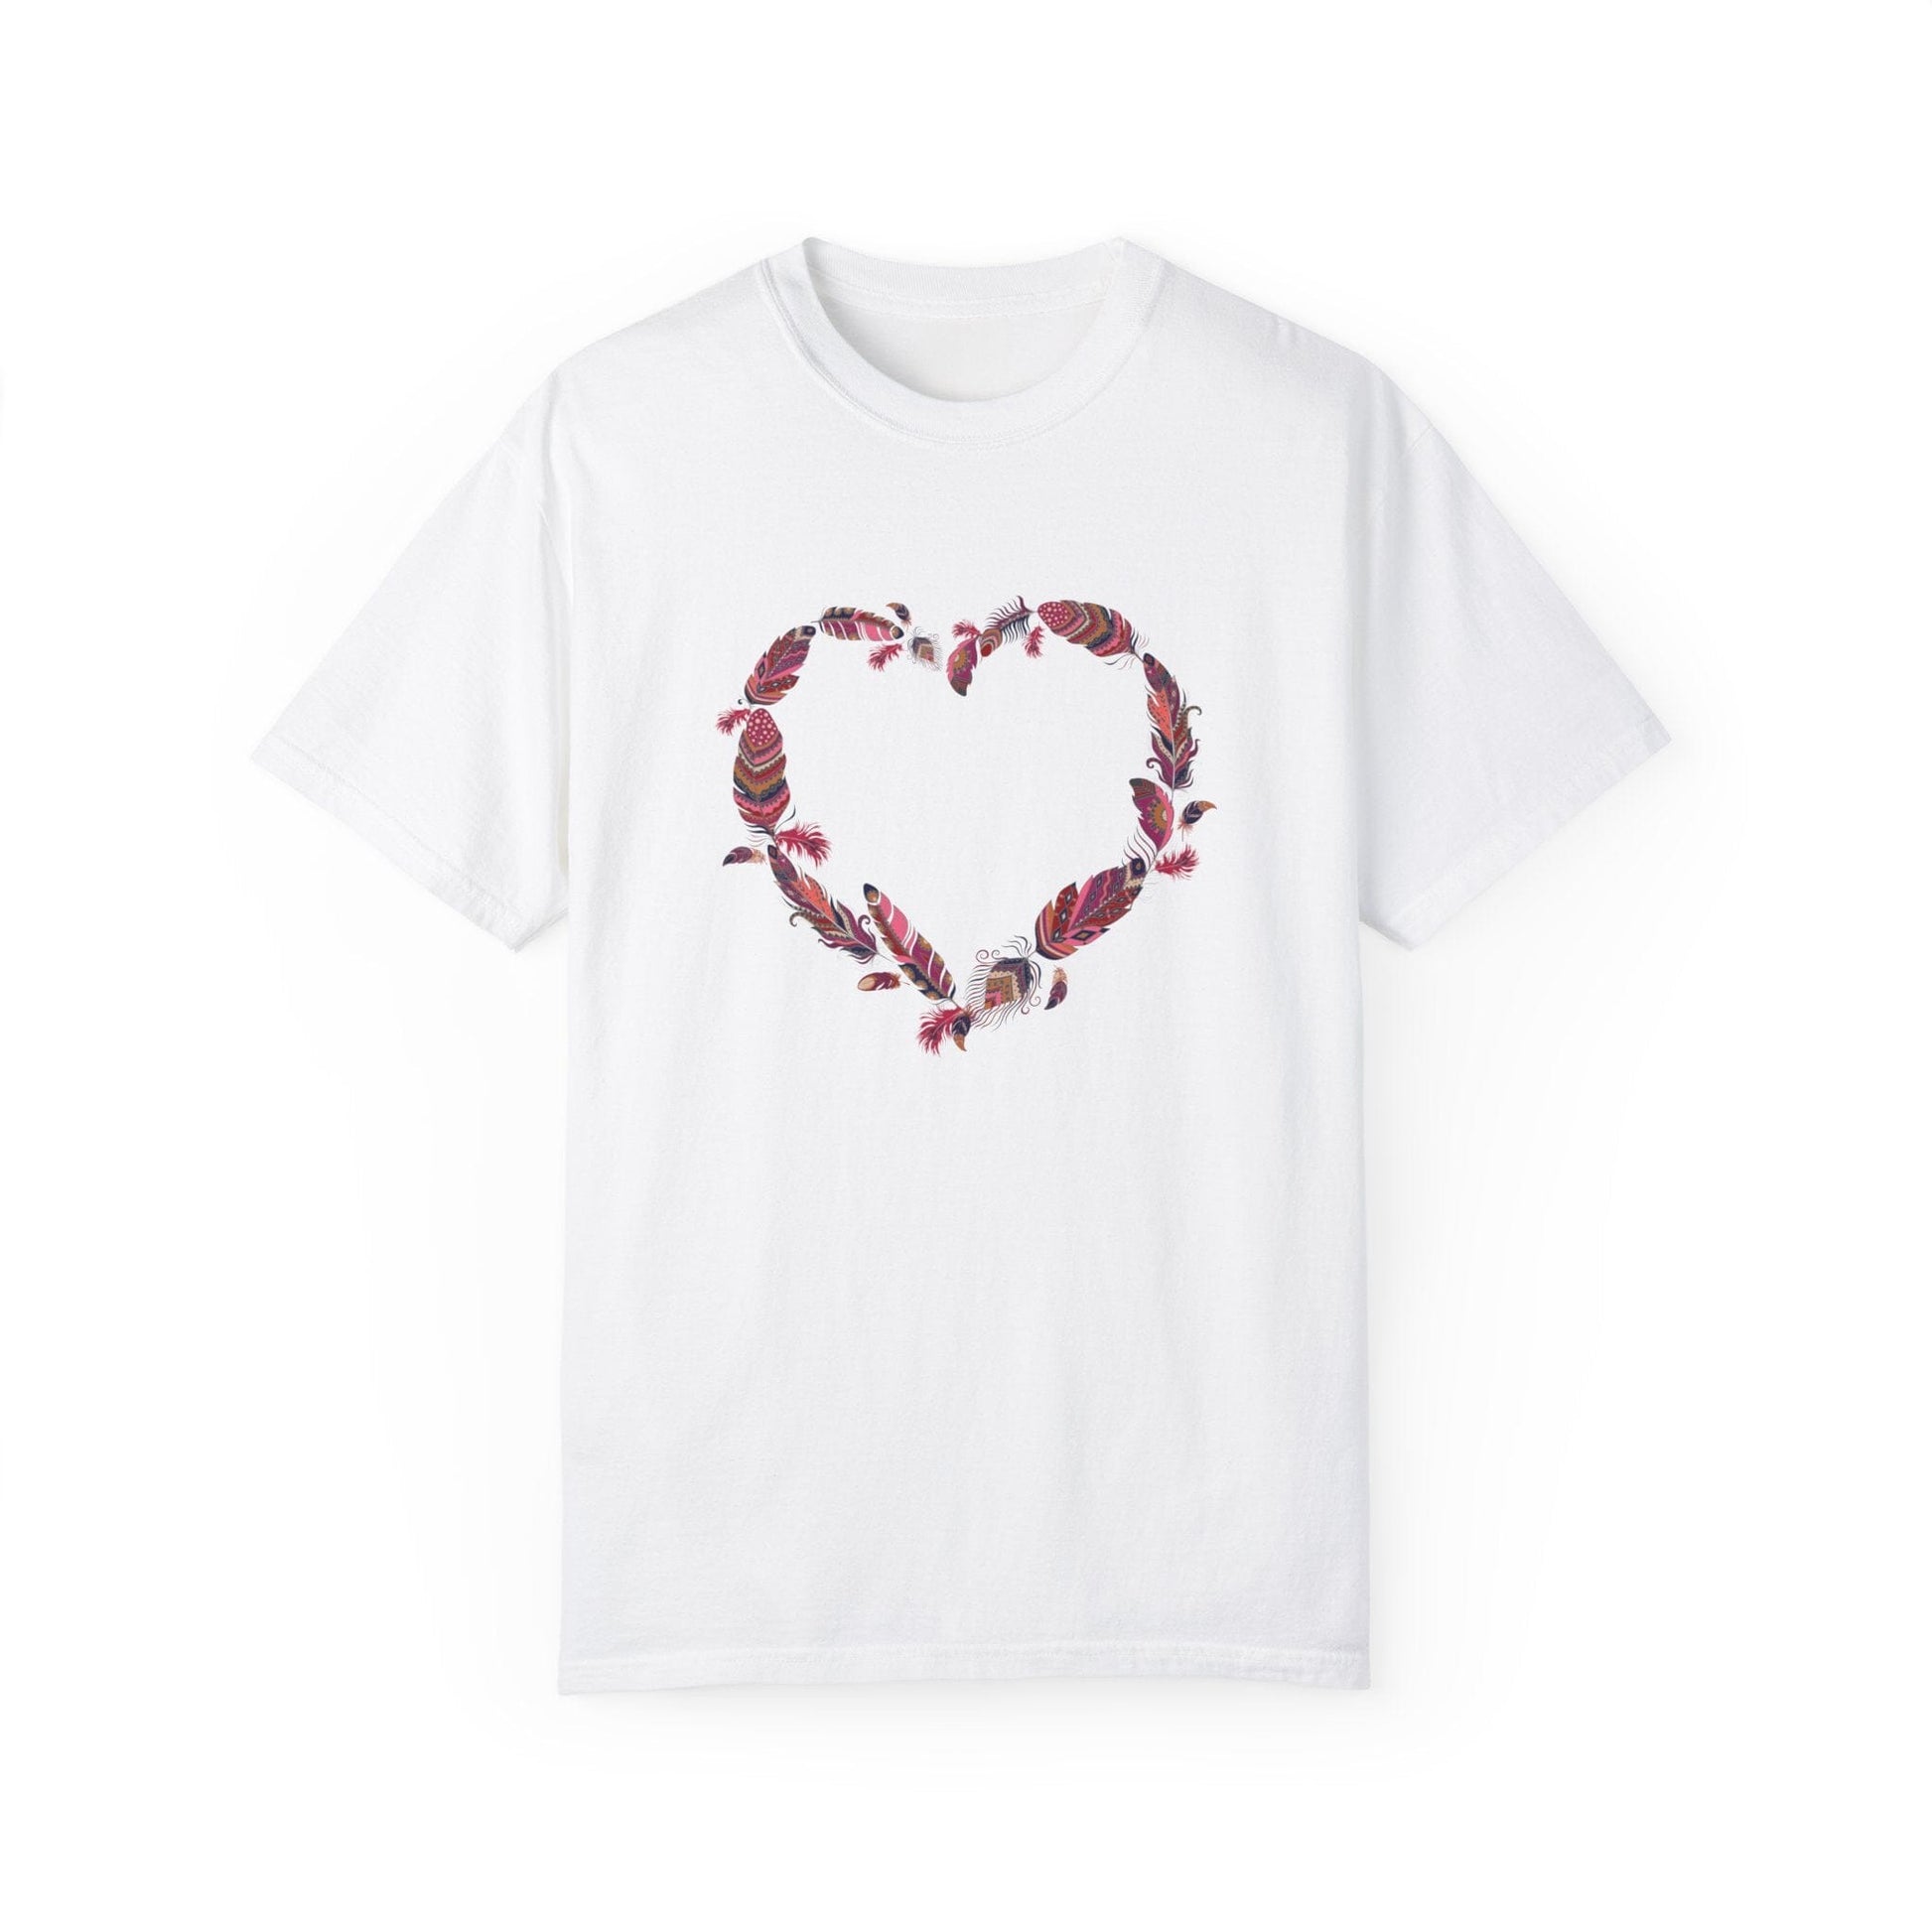 Flowers Tshirt, Boho Feathers Tshirt, Boho Valentine's Day Heart Shirt, Floral Nature Shirt, Art Nouveau Art Deco Shirt, Flowers Lover Graphic Tee T-Shirt Printify White S 